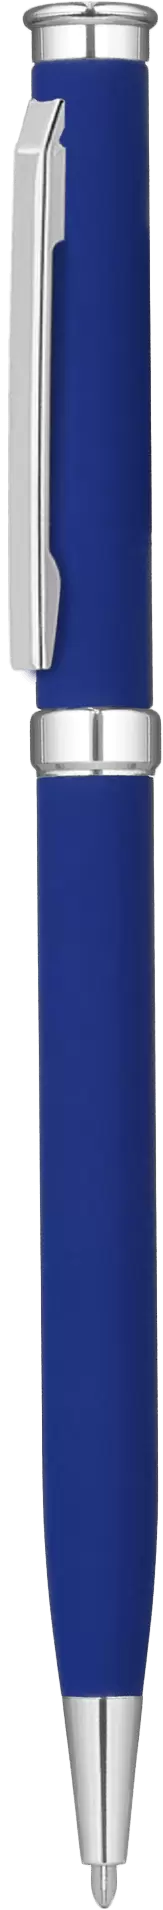 Ручка METEOR SOFT Синяя 1130-01